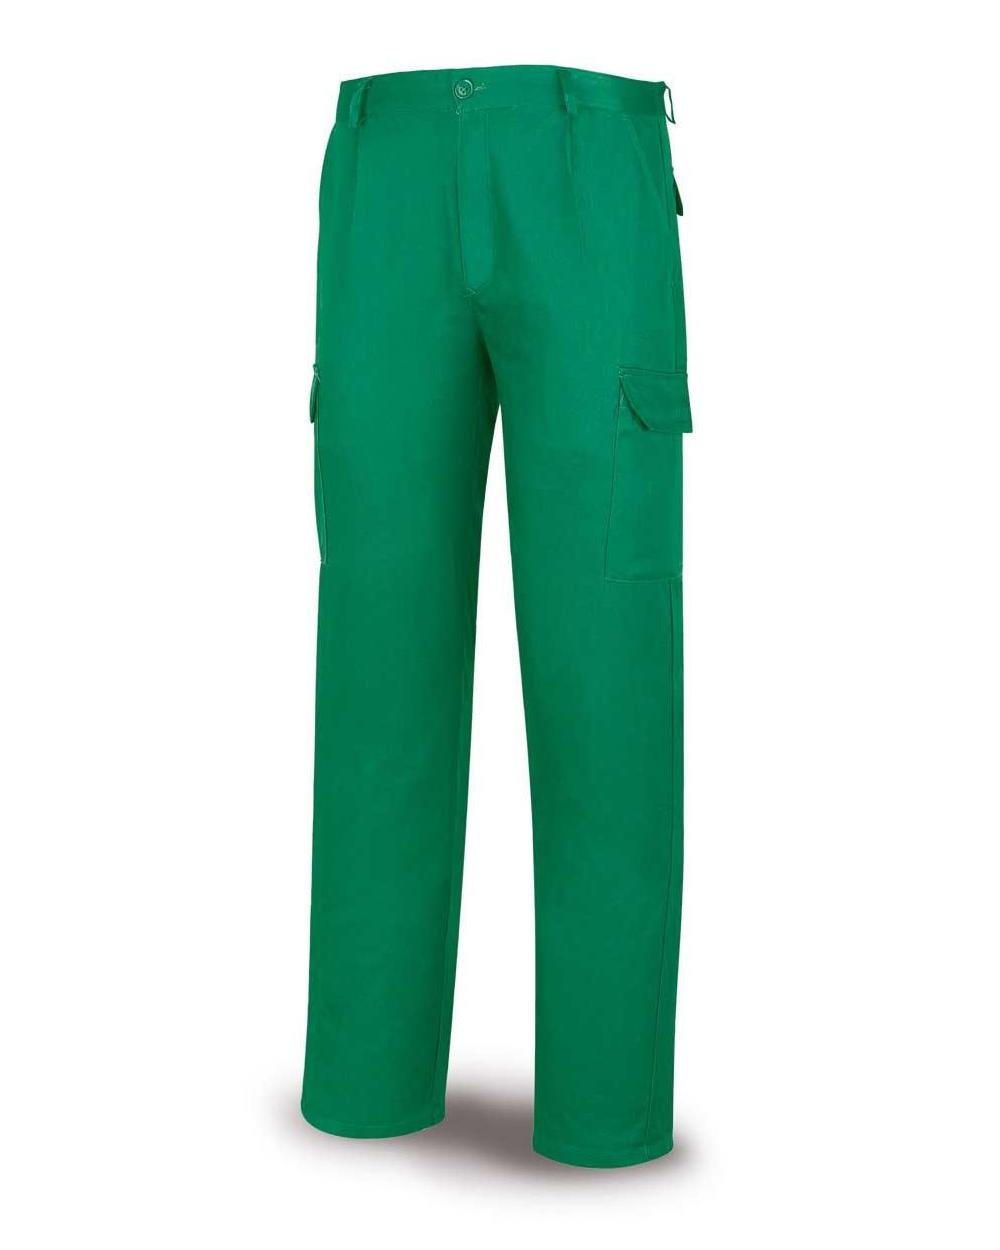 Comprar Pantalón Tergal Verde 388-Pv barato